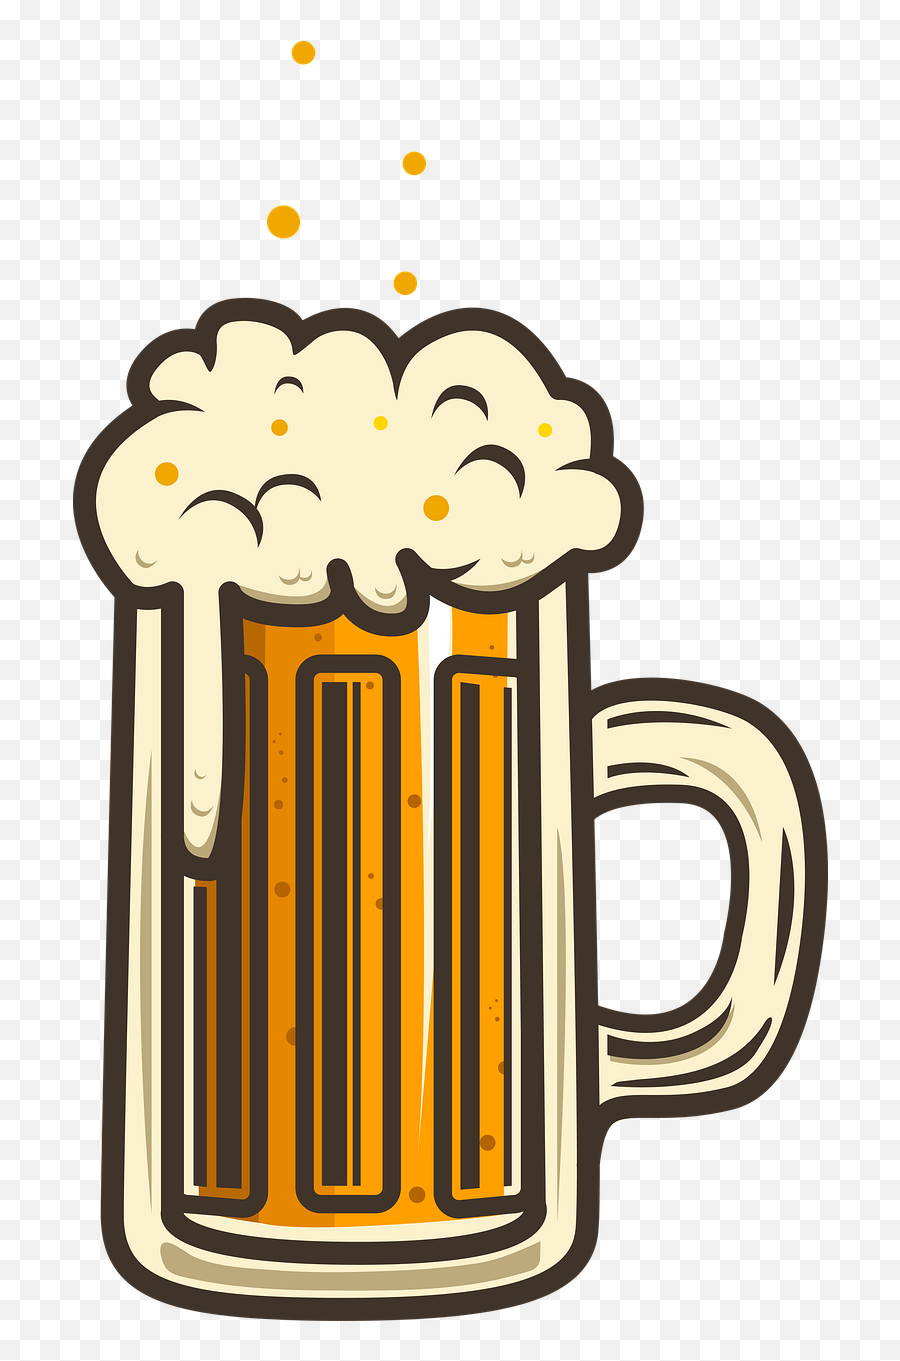 Beer Mug Jug - Free Image On Pixabay Beer Png Logo,Beer Glass Icon